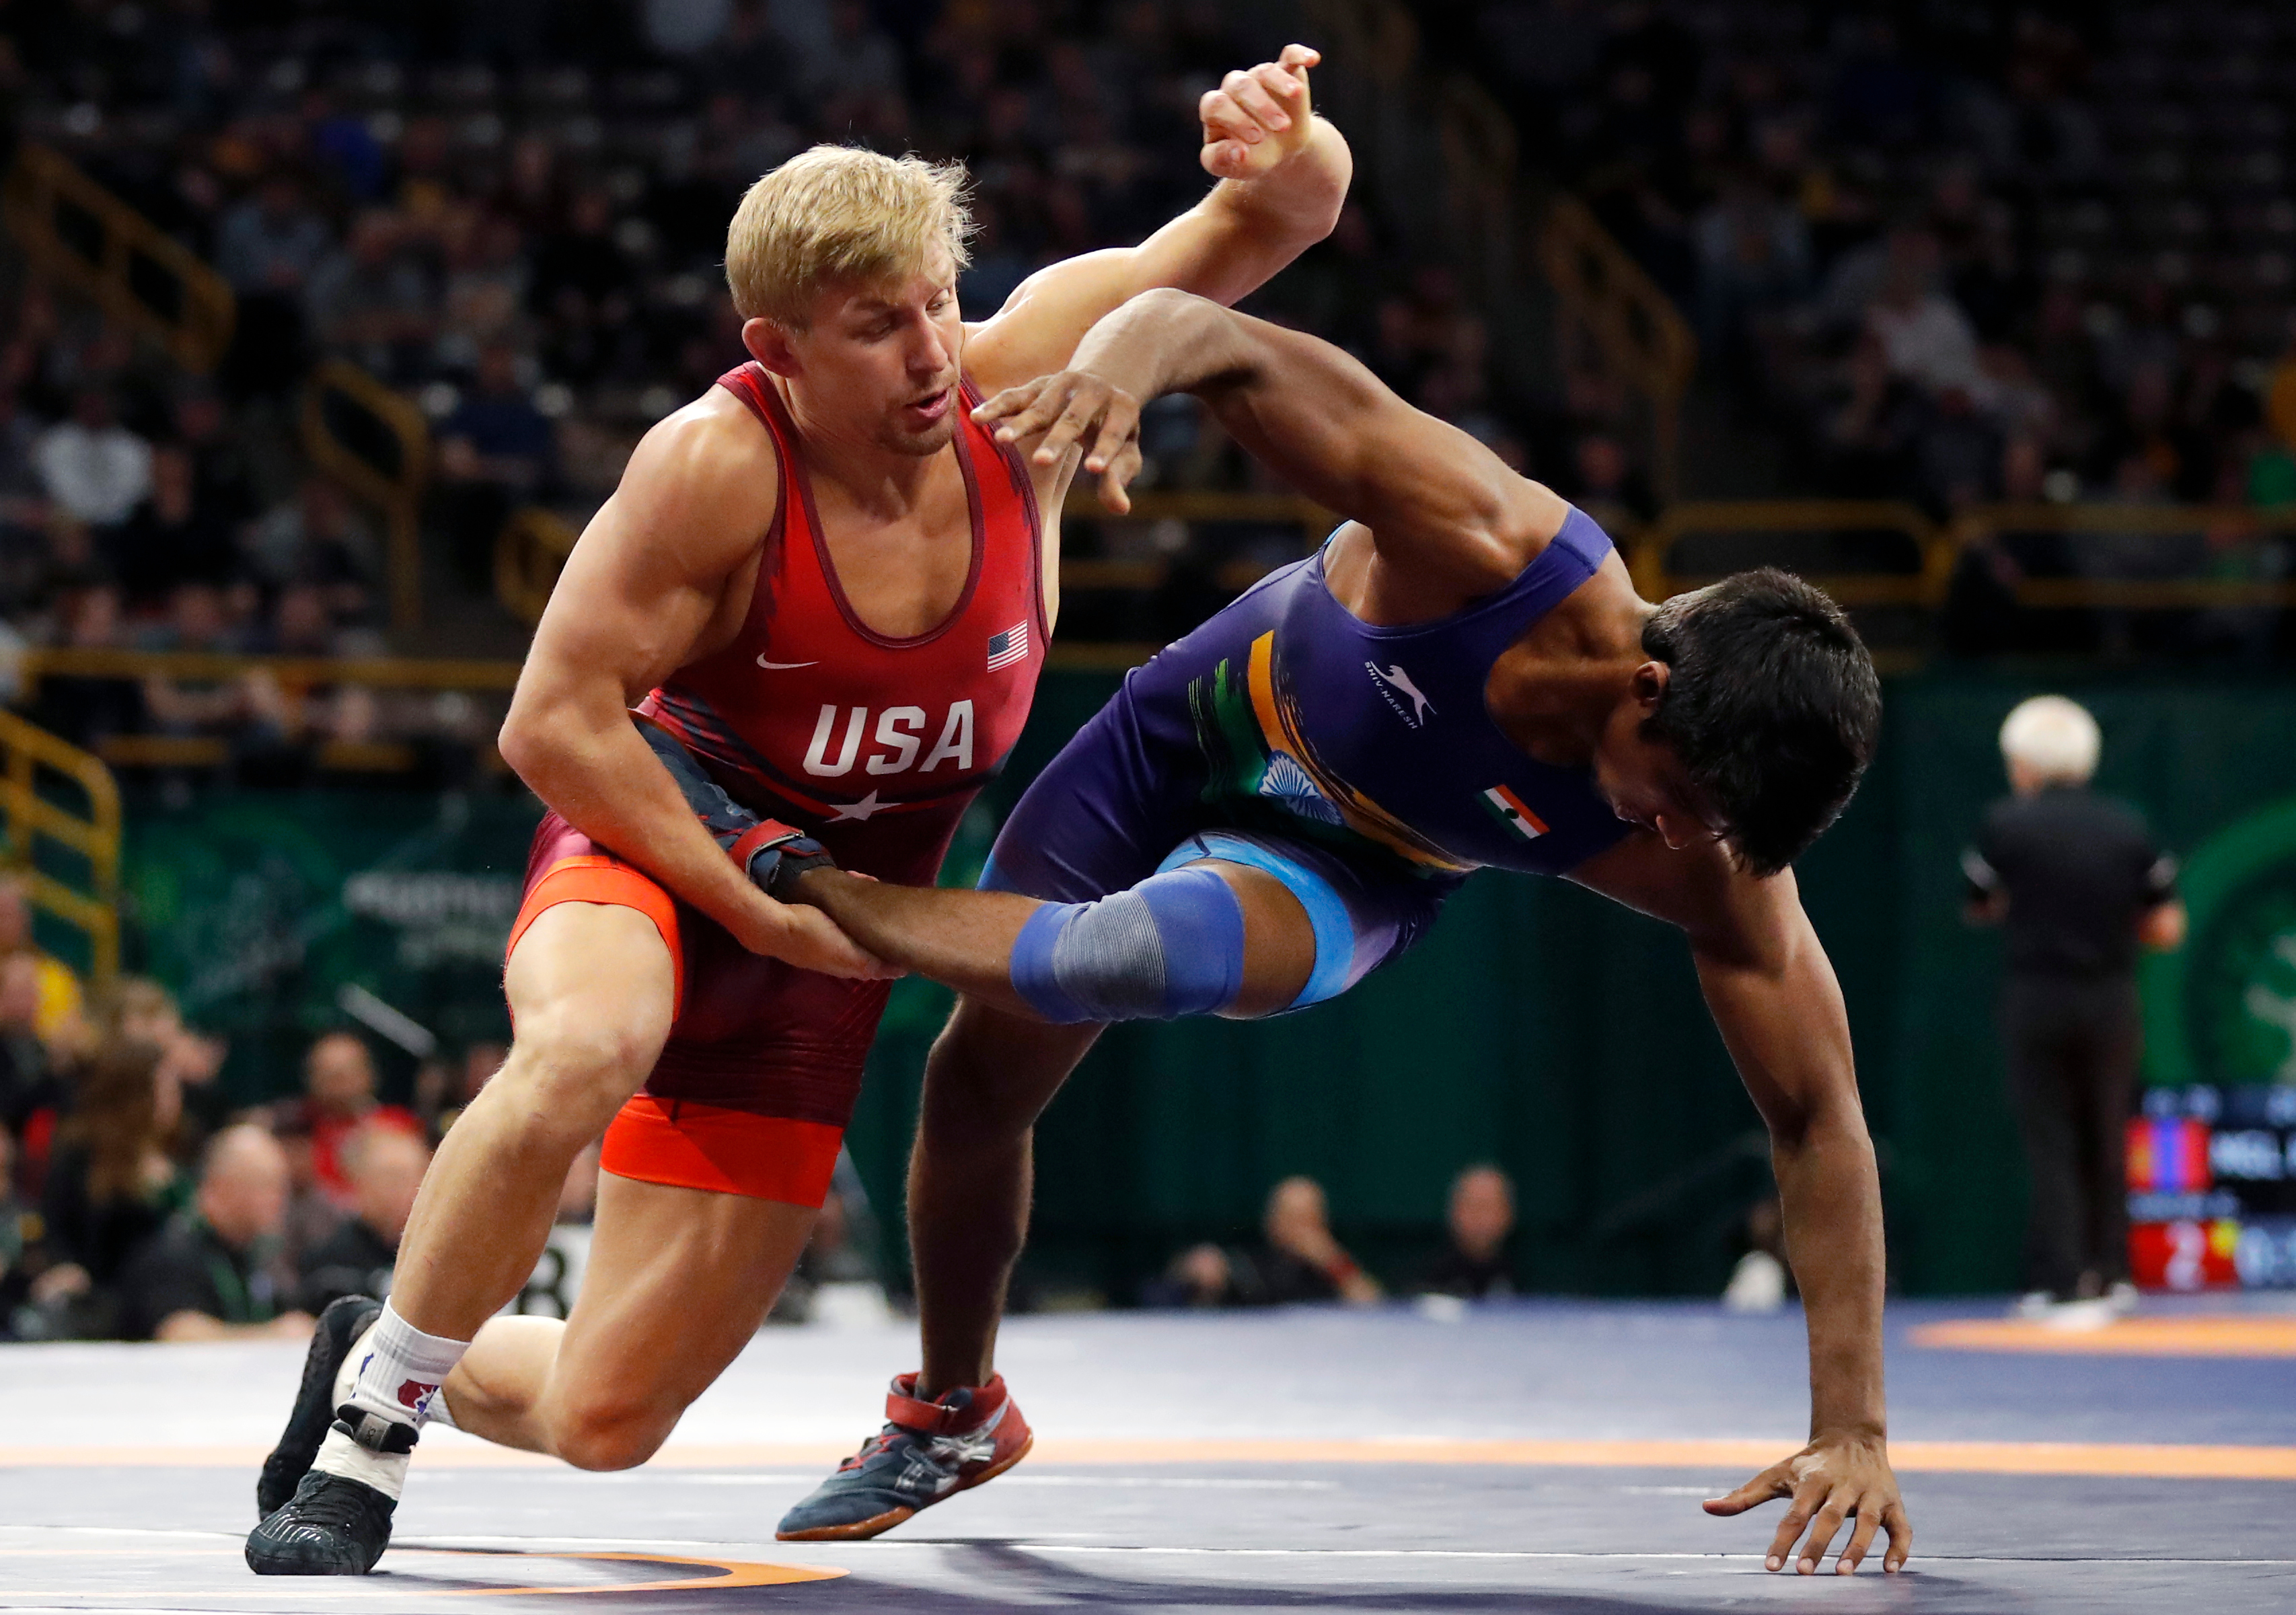 US Wrestler Kyle Dake Finally Has Chance at Olympic Gold